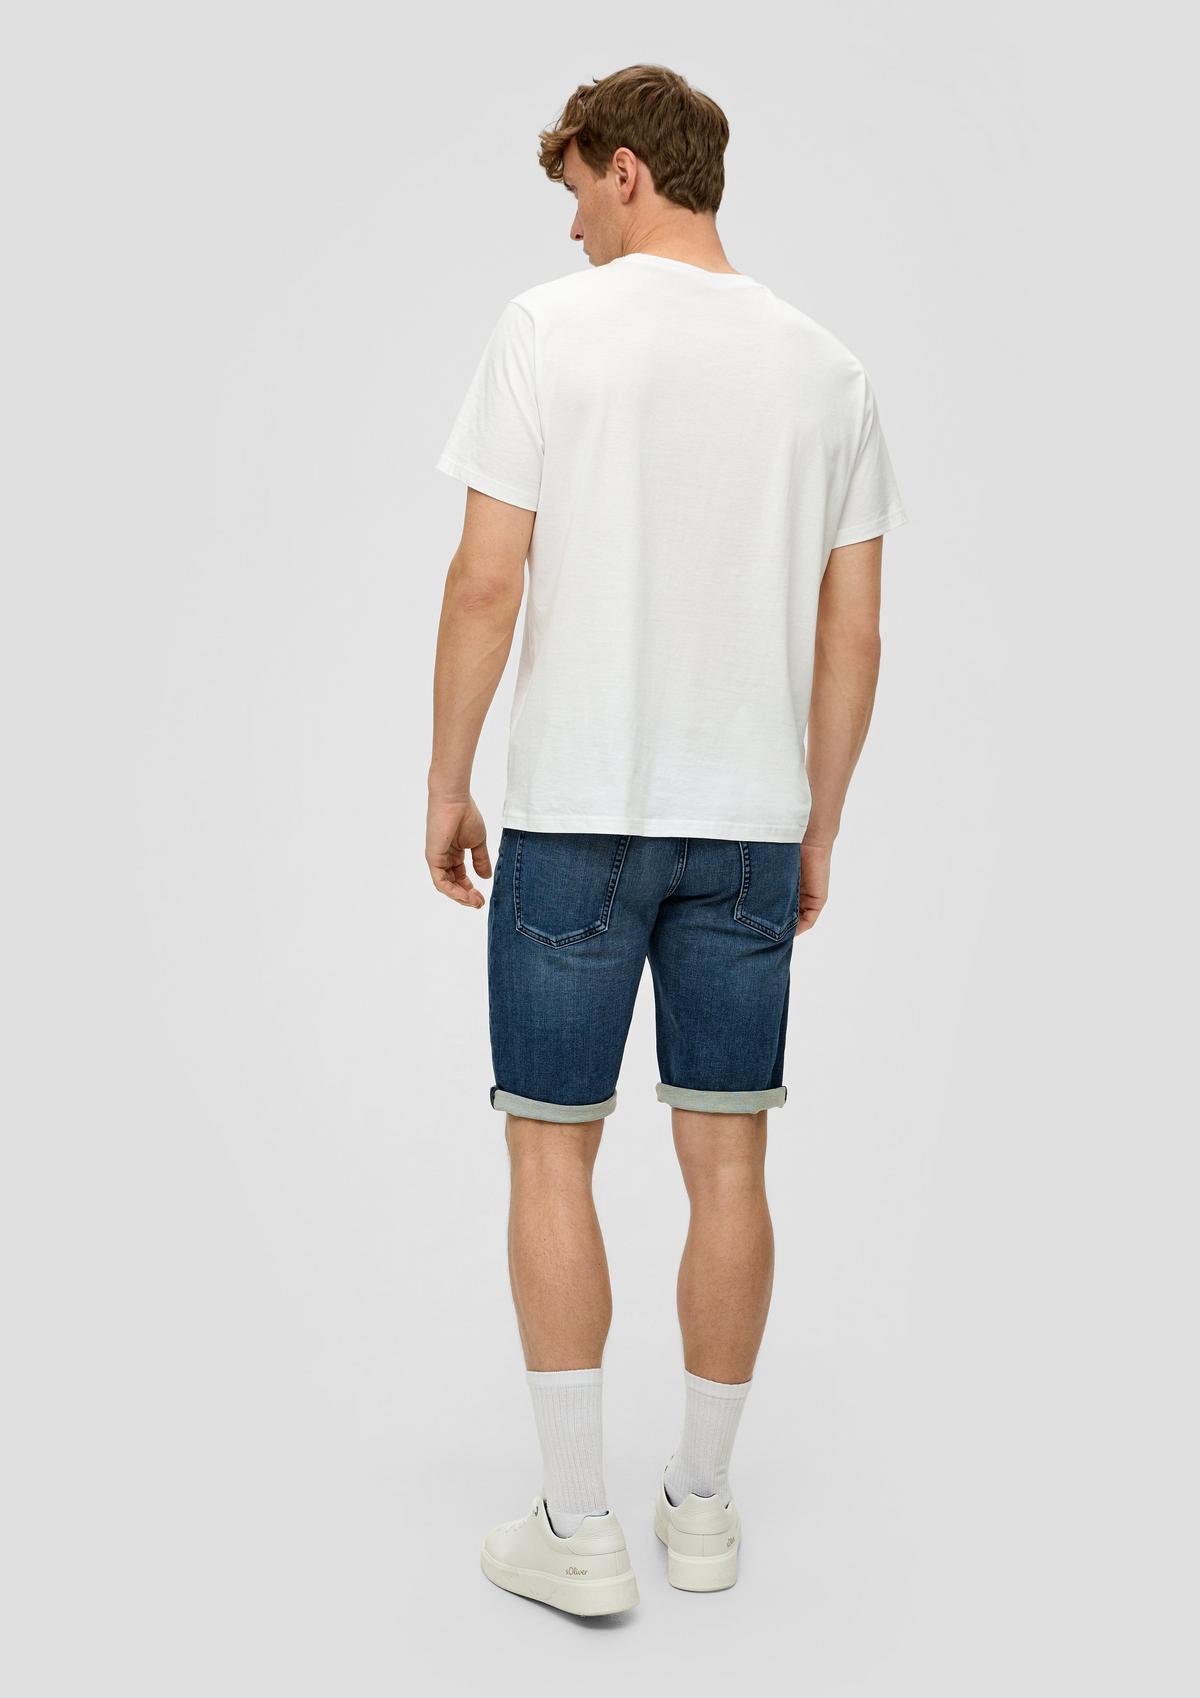 s.Oliver Mauro Bermuda jeans / regular fit / mid rise / straight leg